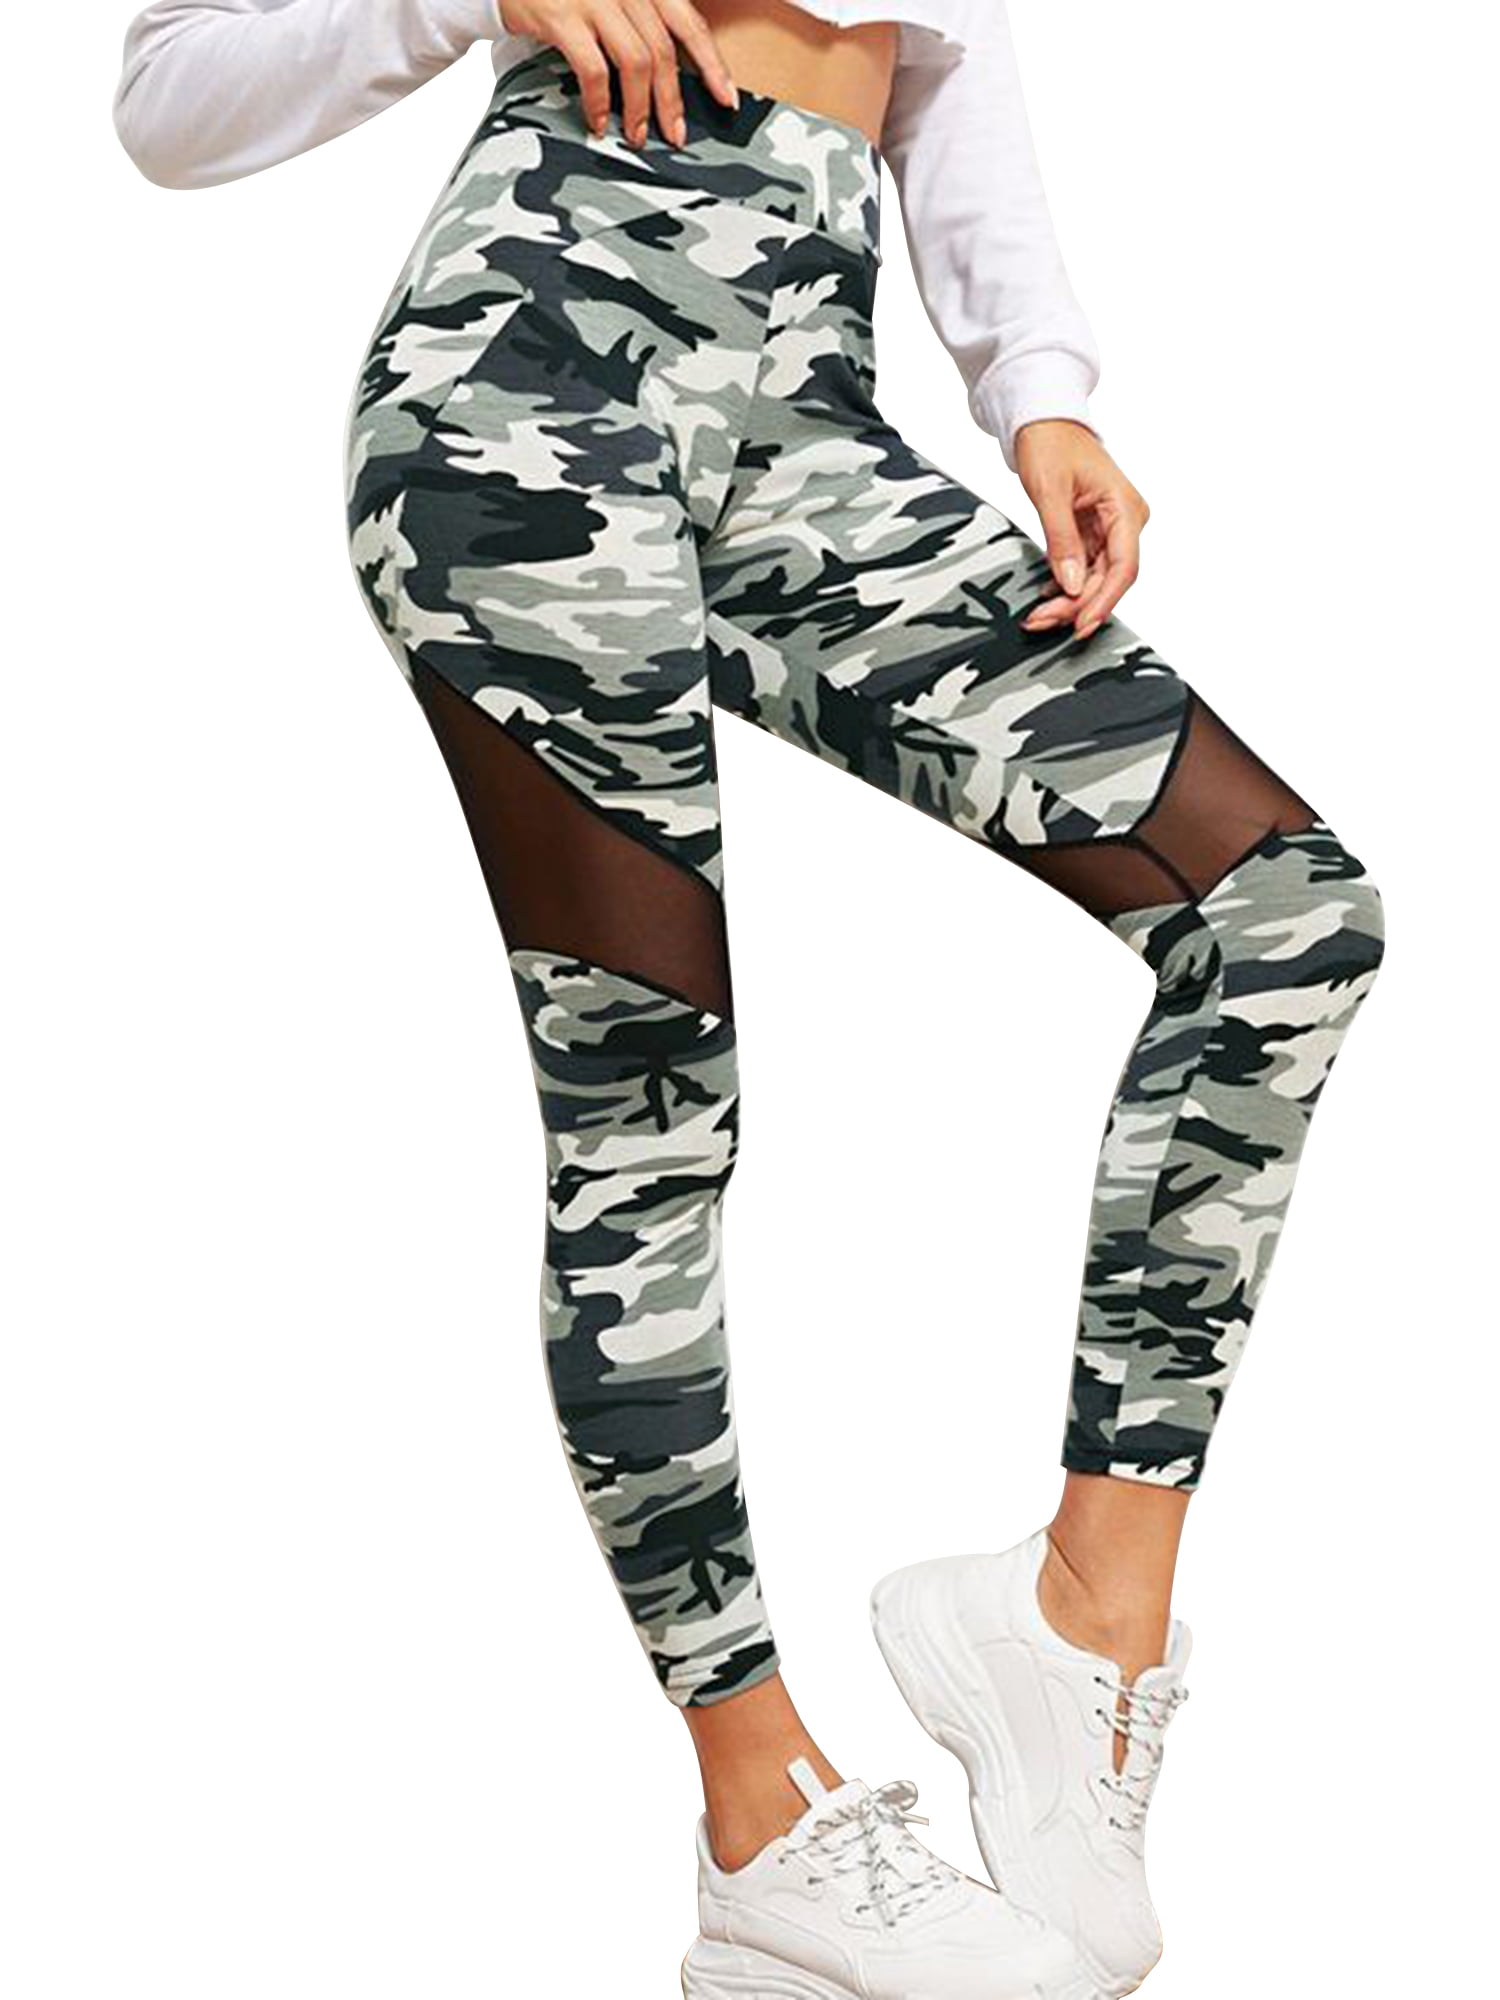 Women Camouflage High Waist Yoga Leggings Sport Gym Workout Athletic Pants 